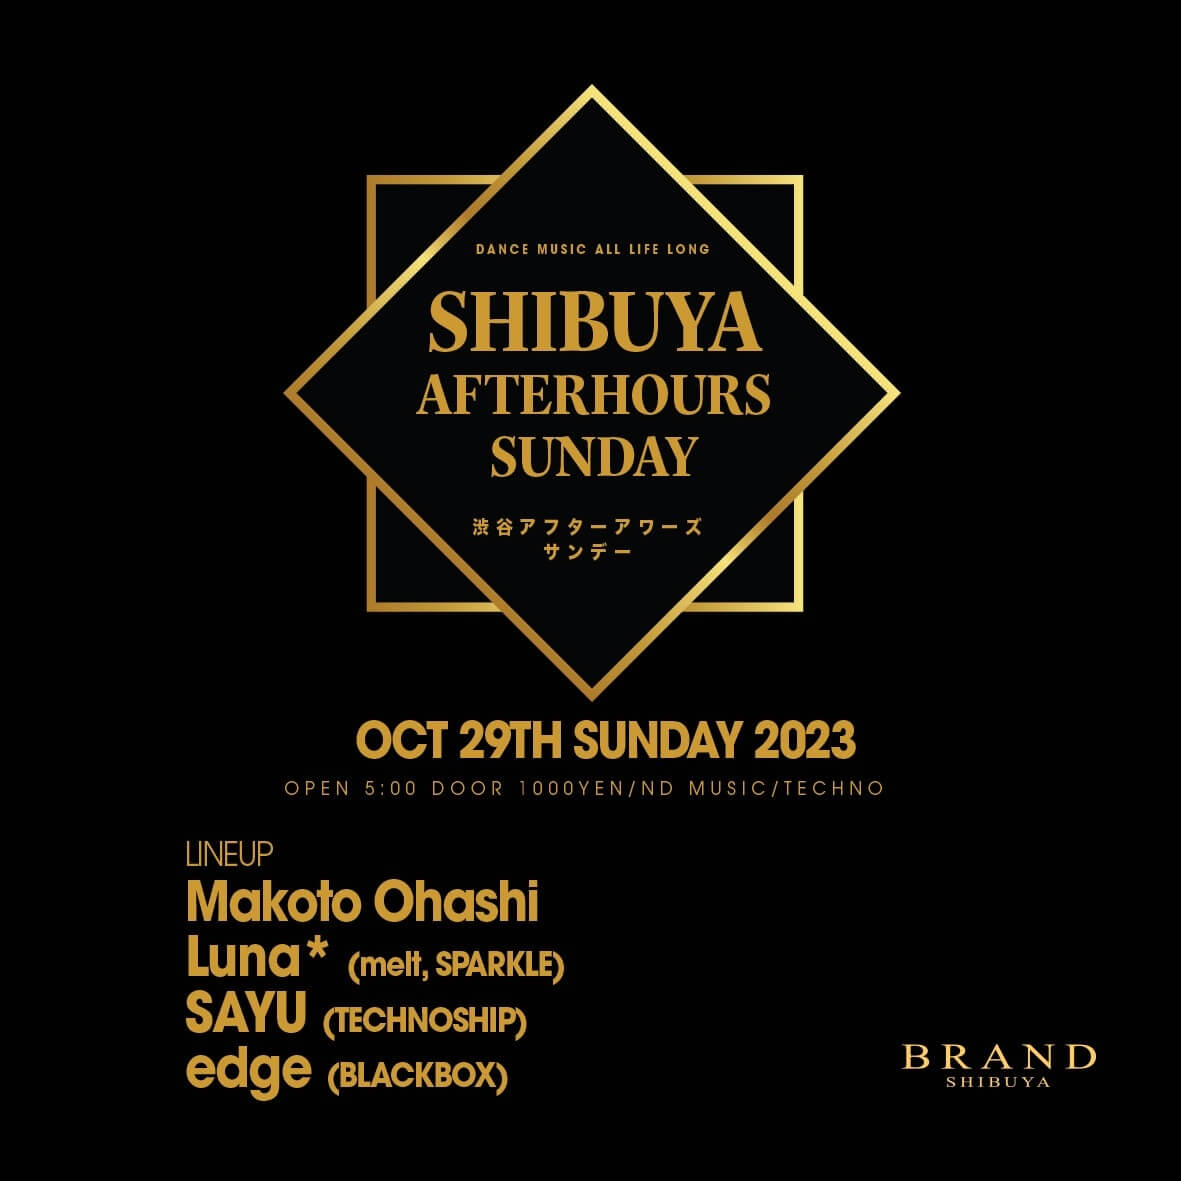 SHIBUYA AFTERHOURS SUNDAY 2023年10月29日（日曜日）に渋谷 クラブのBRAND SHIBUYAで開催されるTECHNOイベント